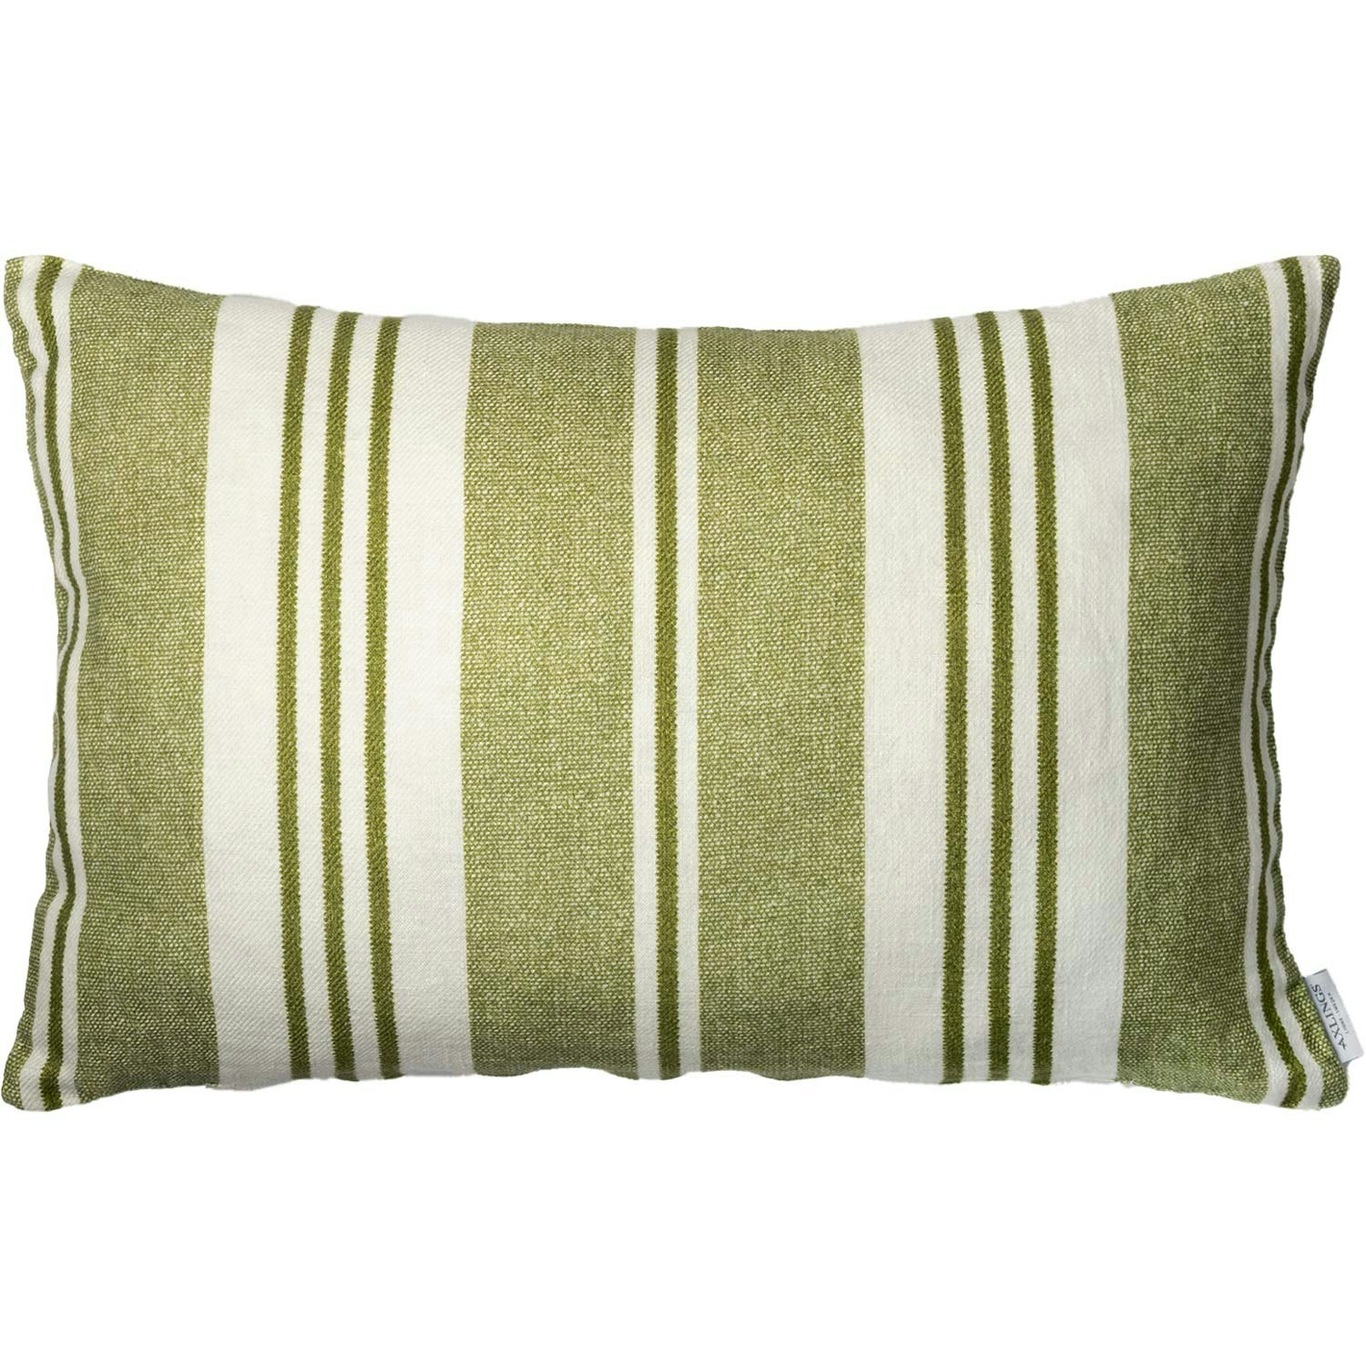 Vändteg Cushion Cover 40x60 cm, Green/Off-white